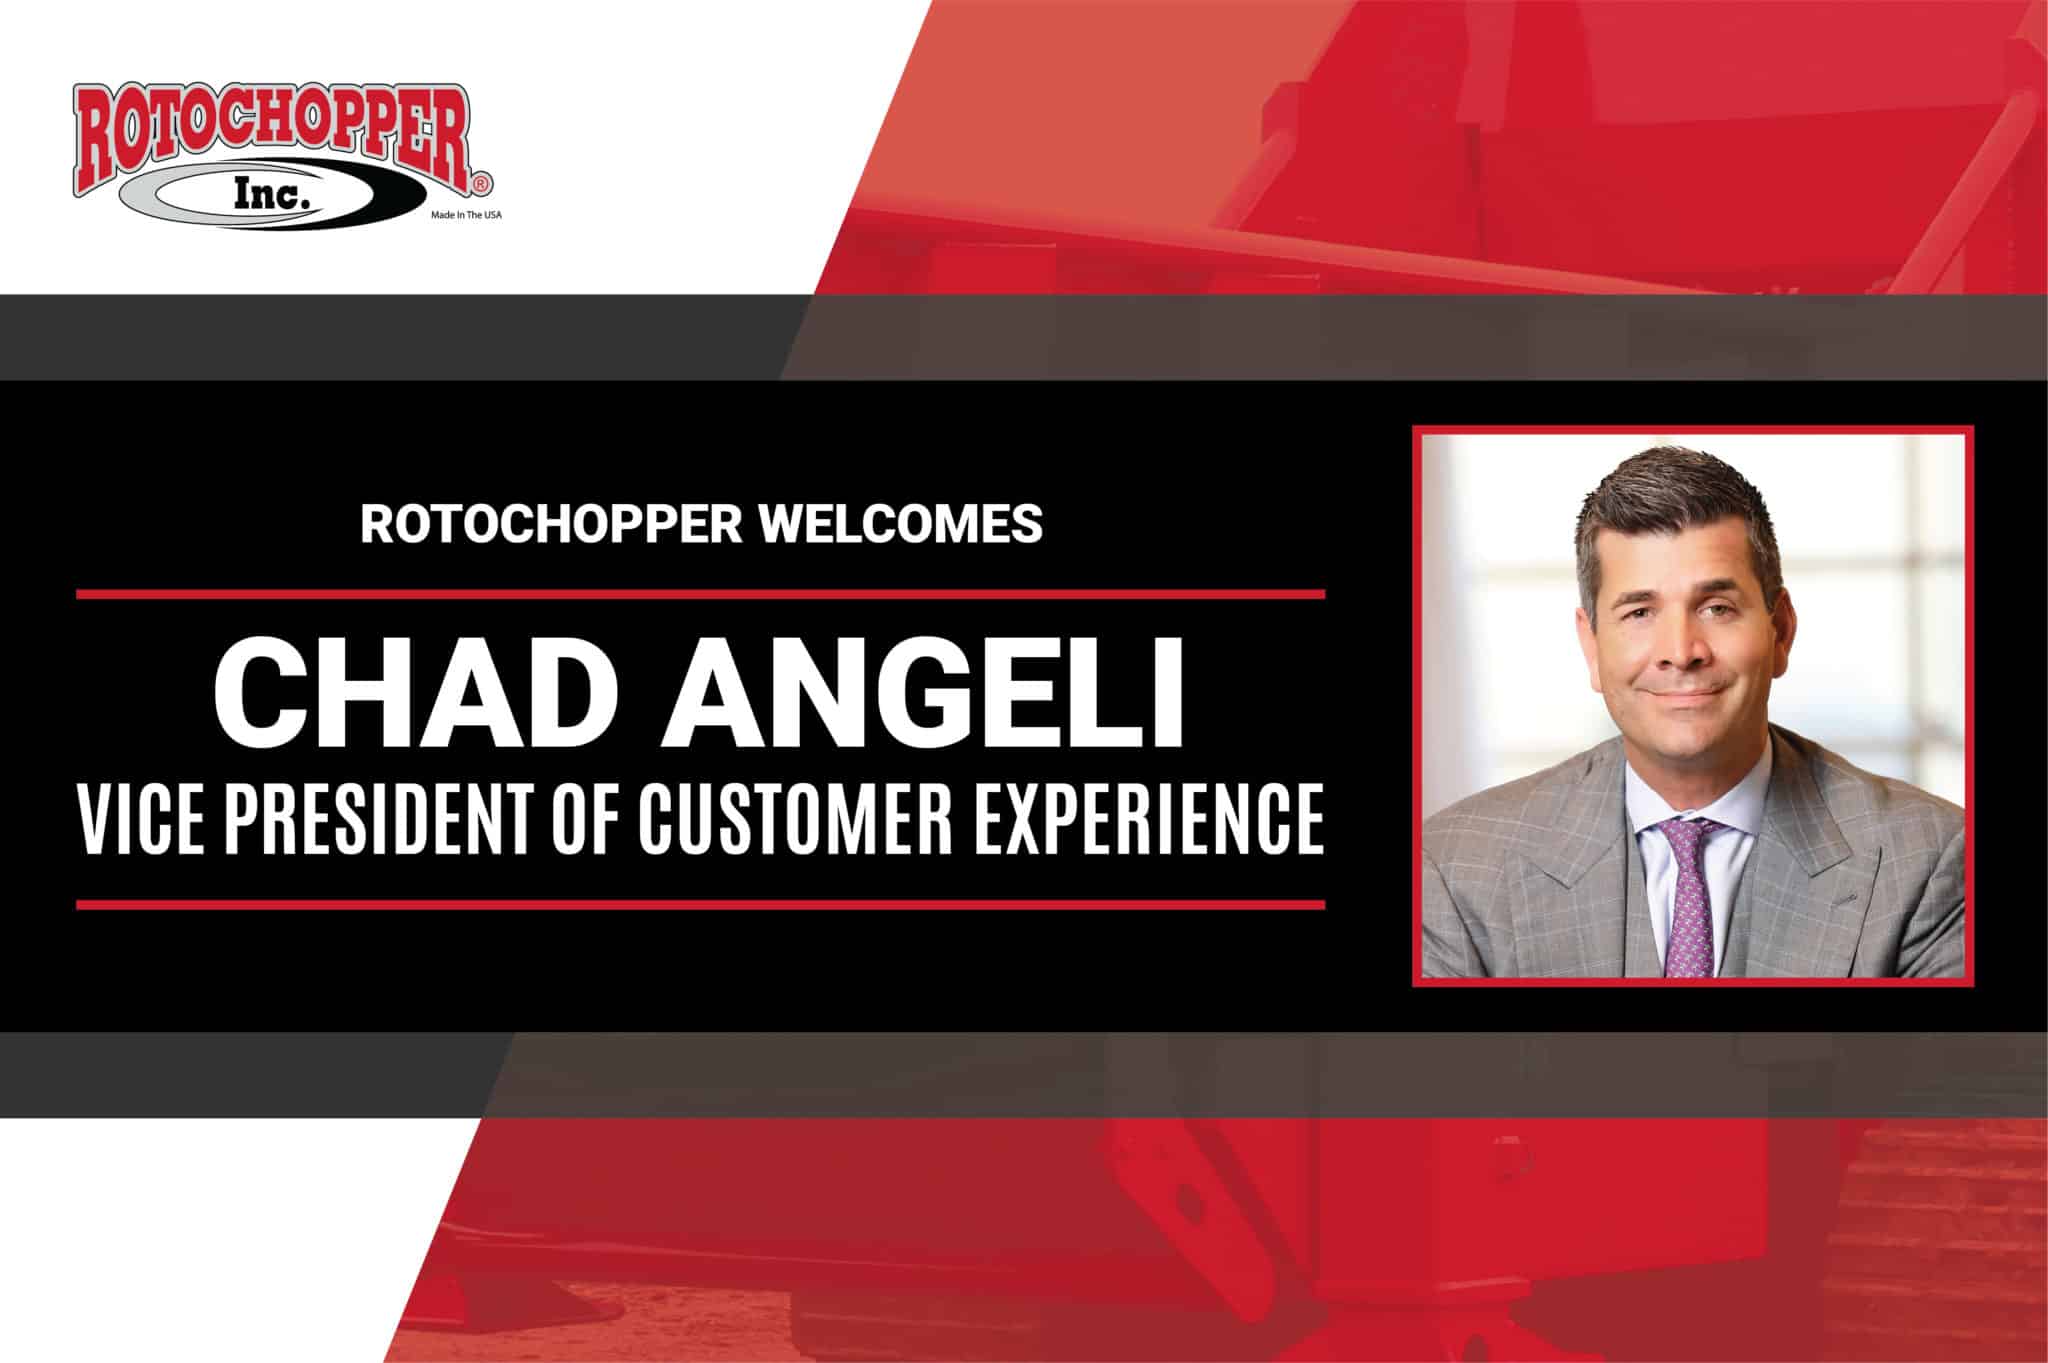 chad angeli rotochopper vice president of customer experience